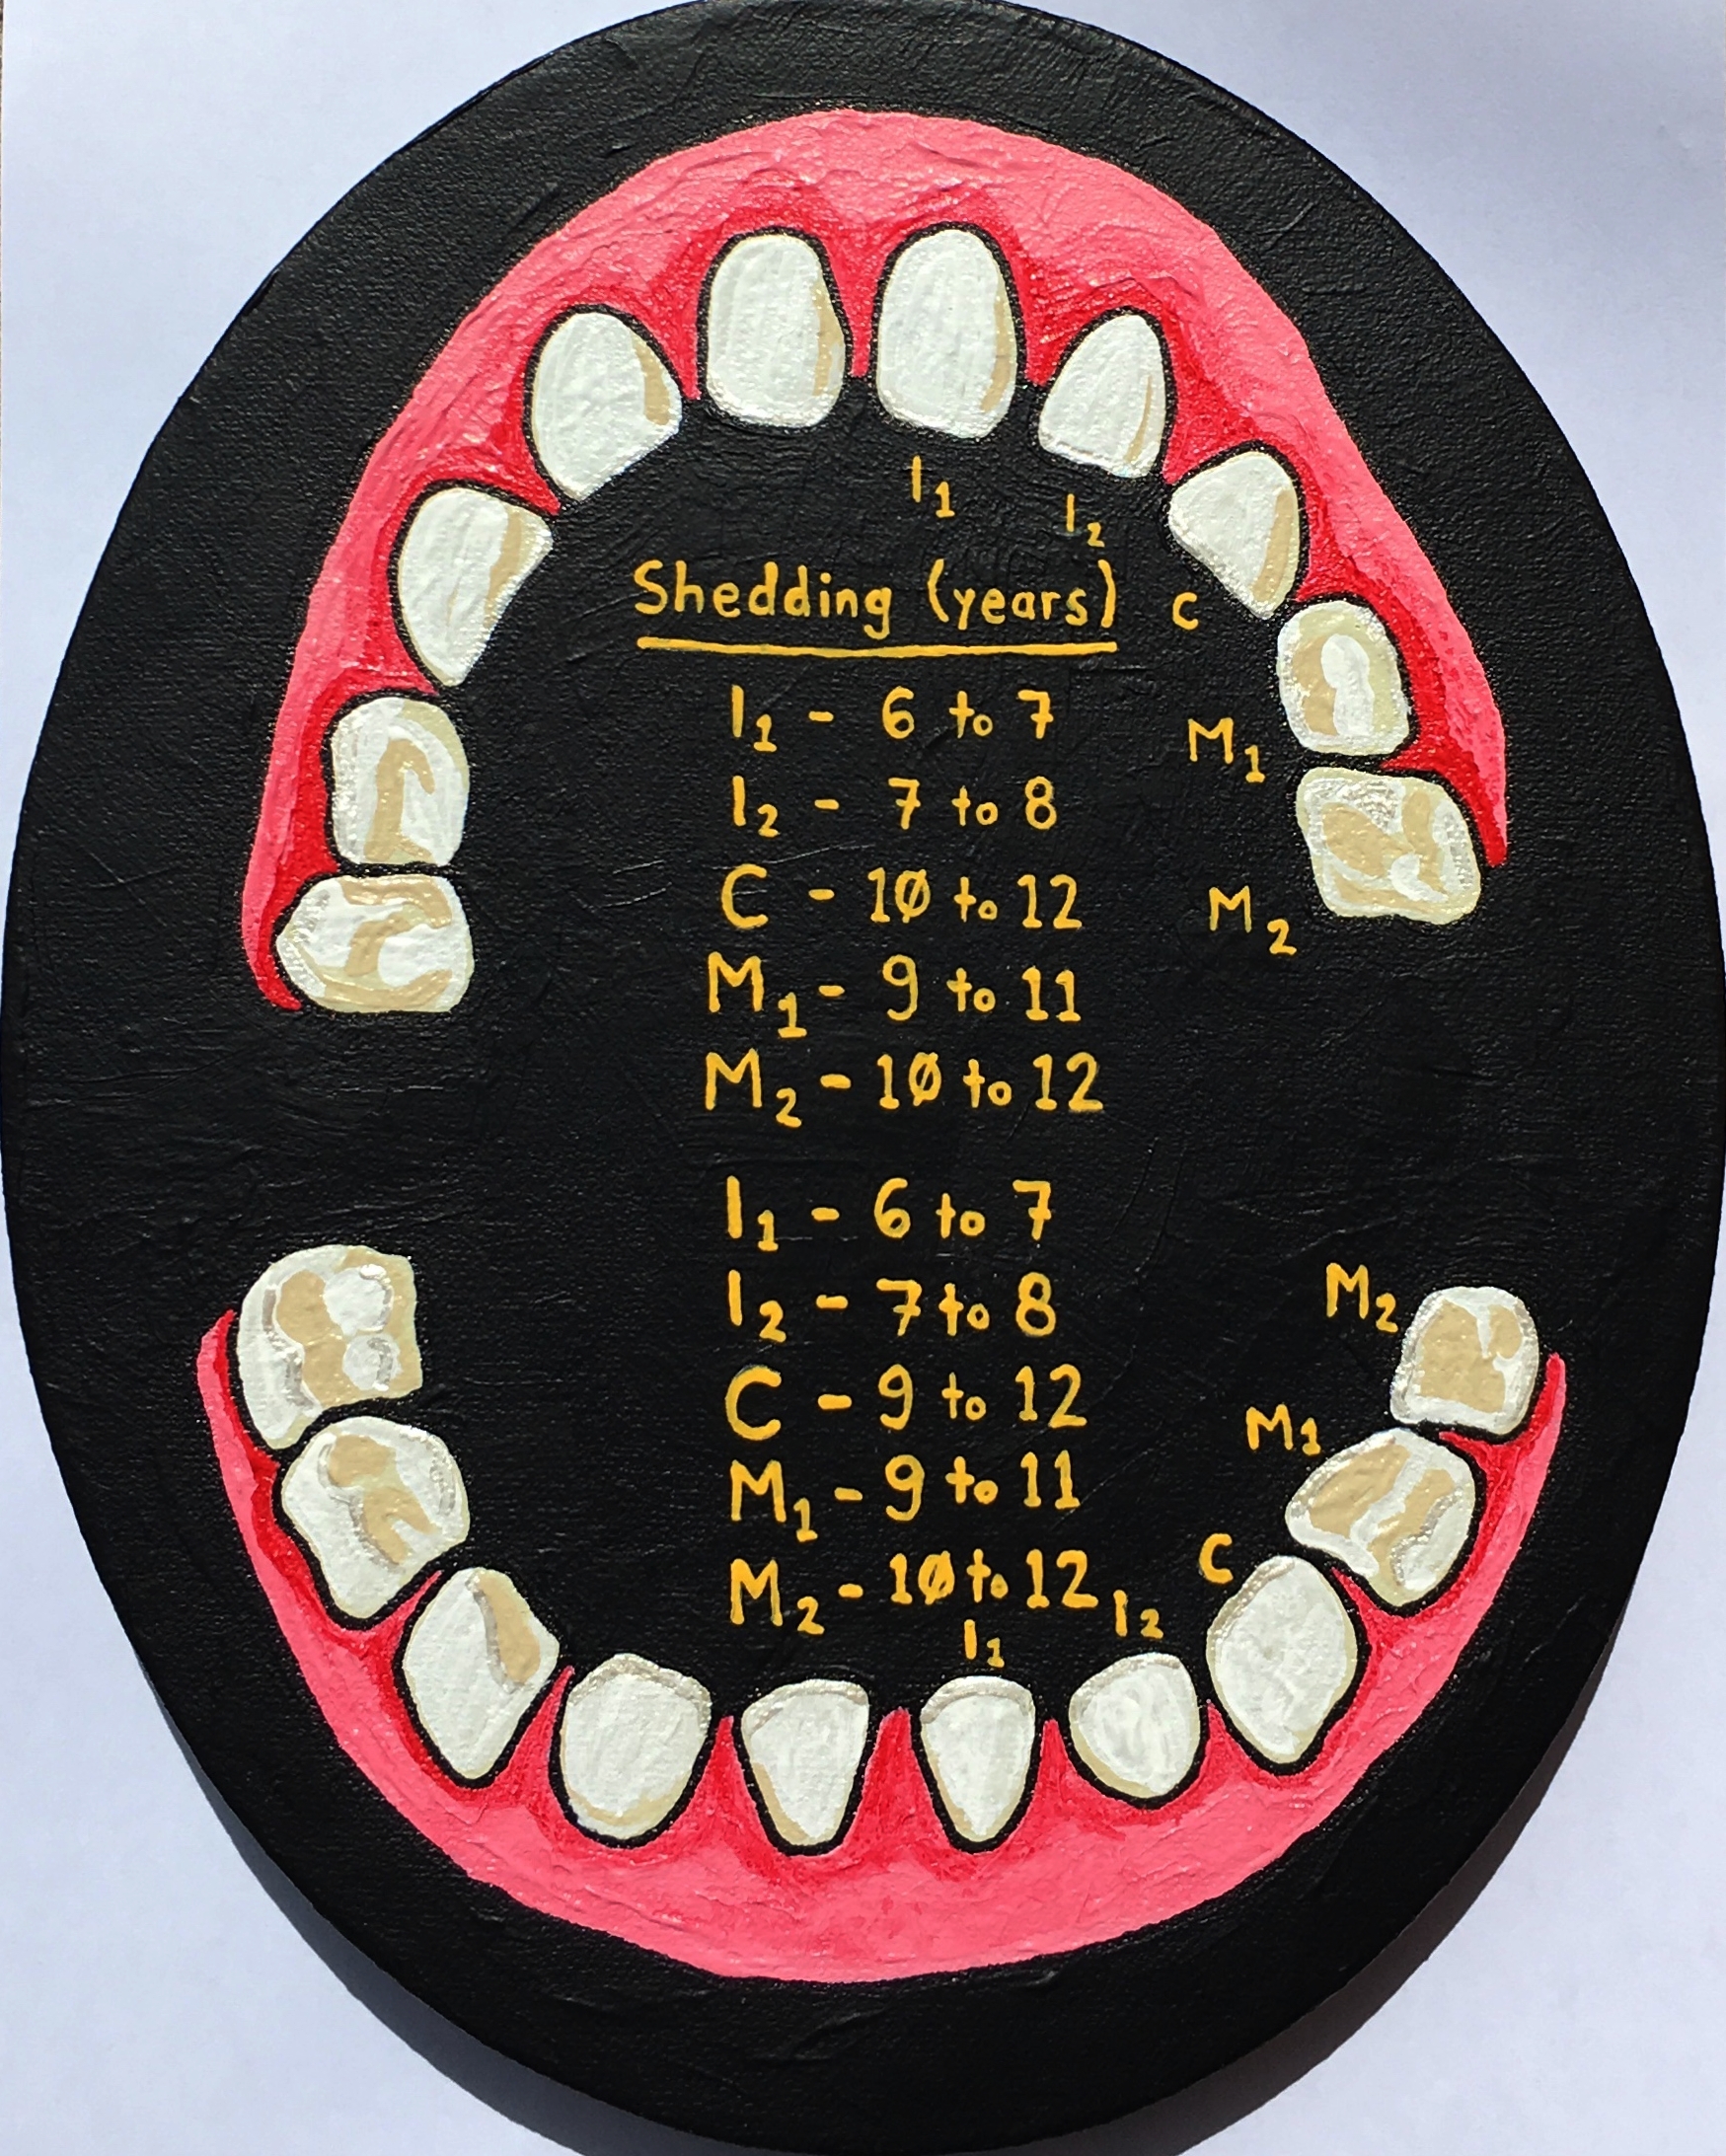 A Child's Teeth